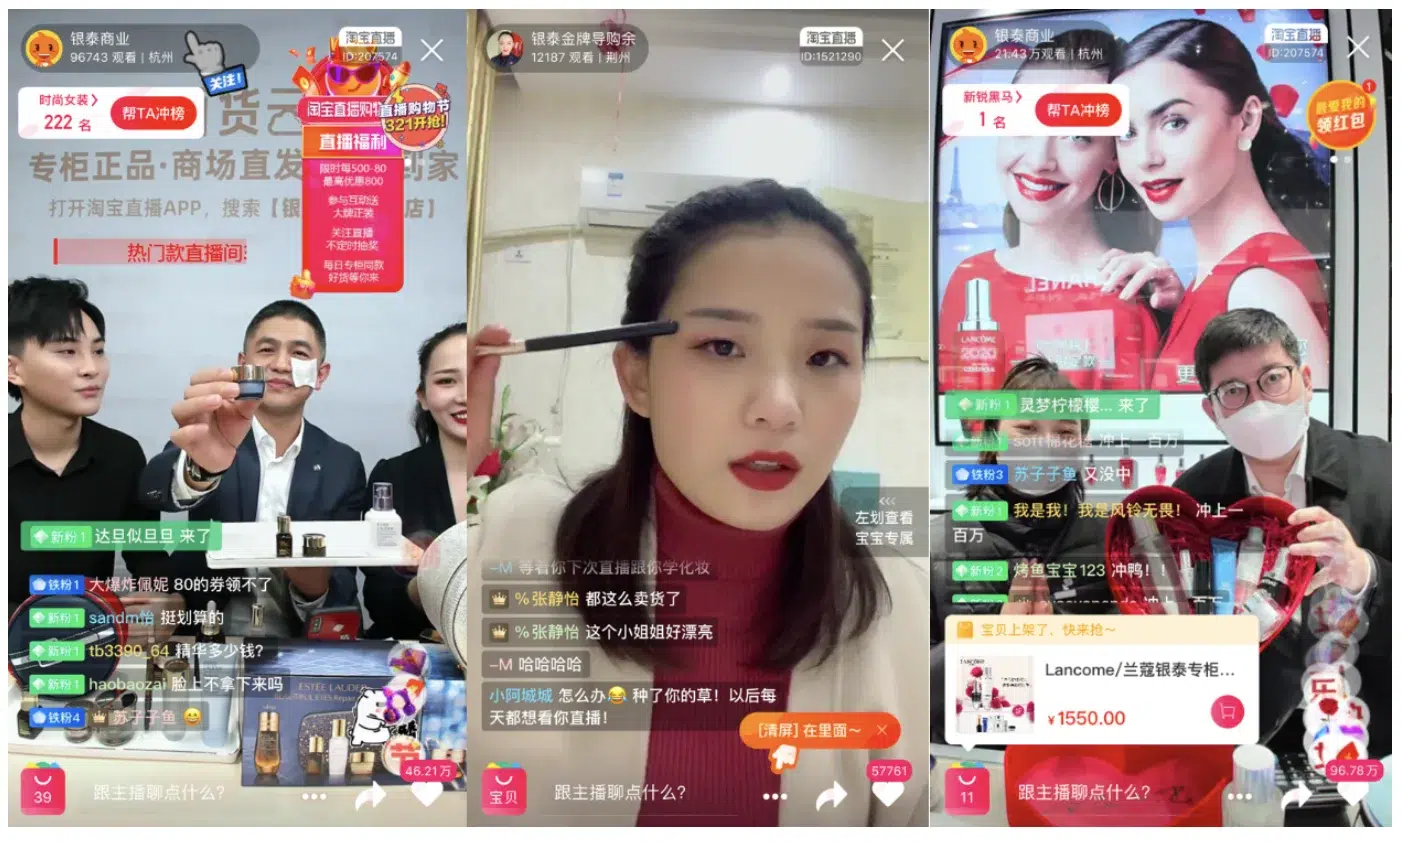 Taobao livestream fashion